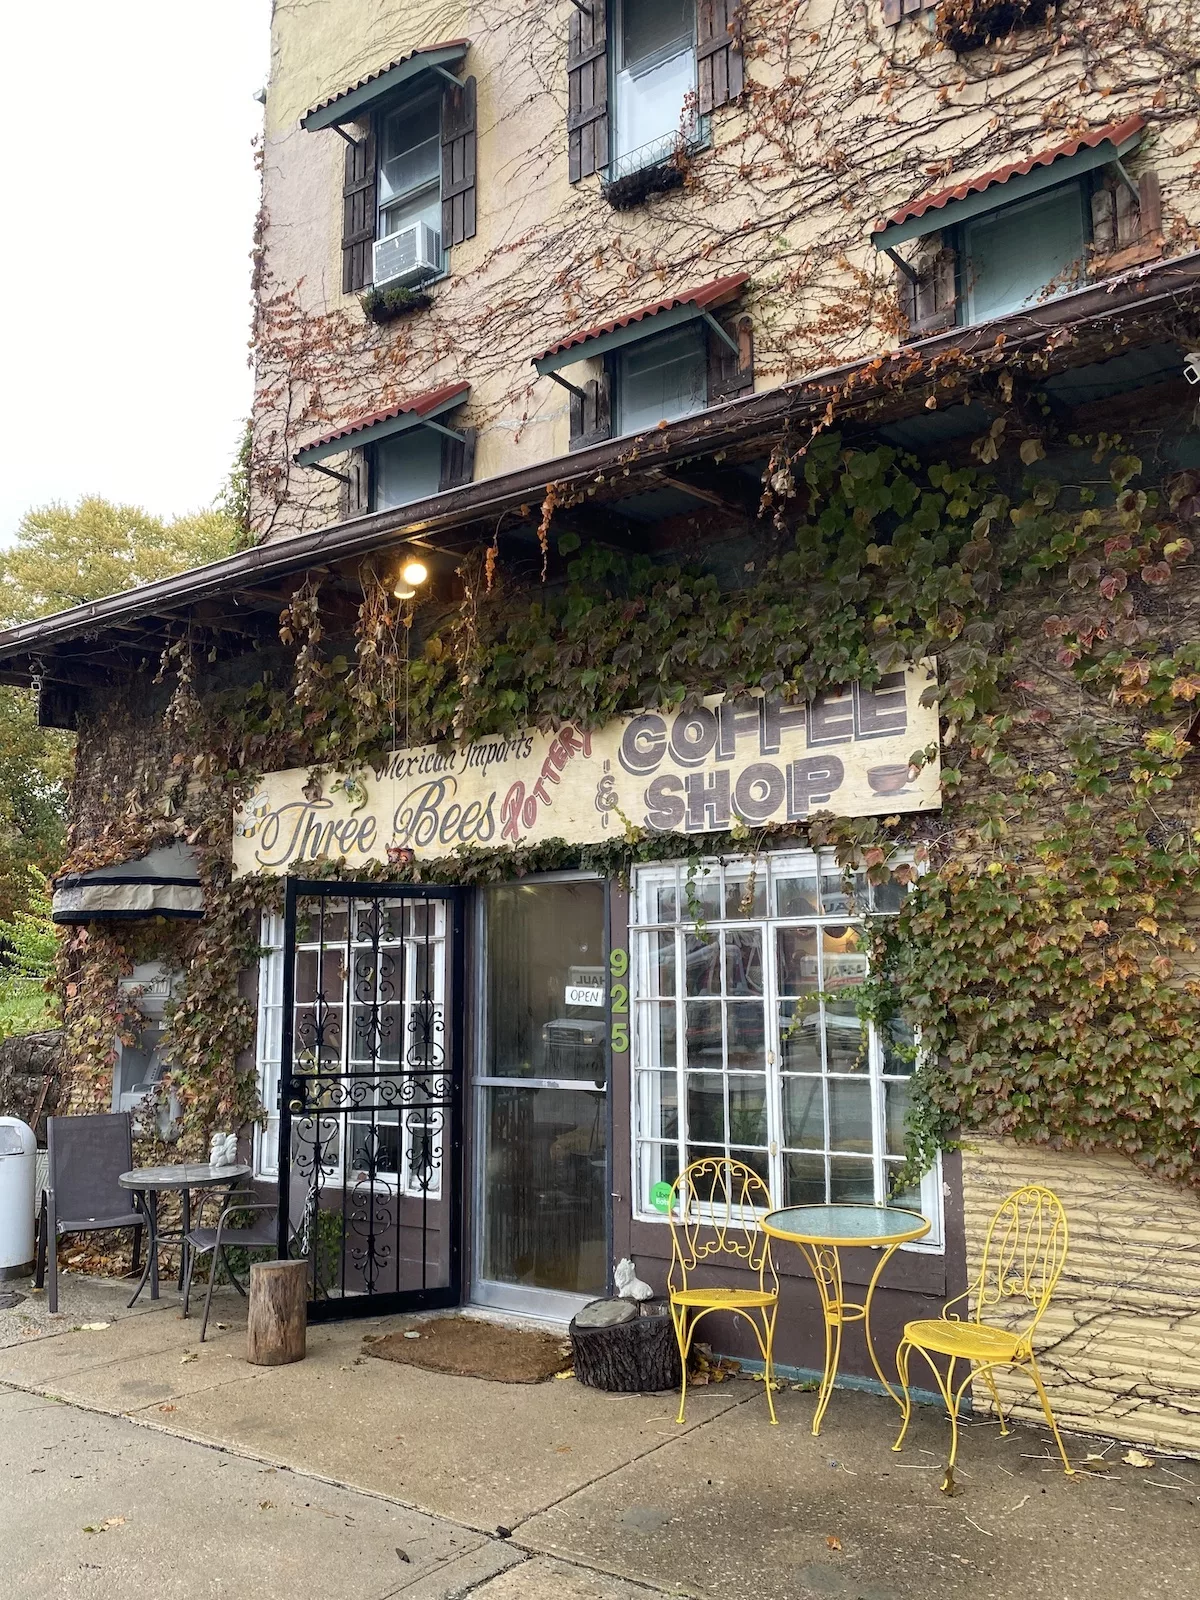 Exterior of Three Bees Potter & Coffee Shop in Kansas City, Kansas